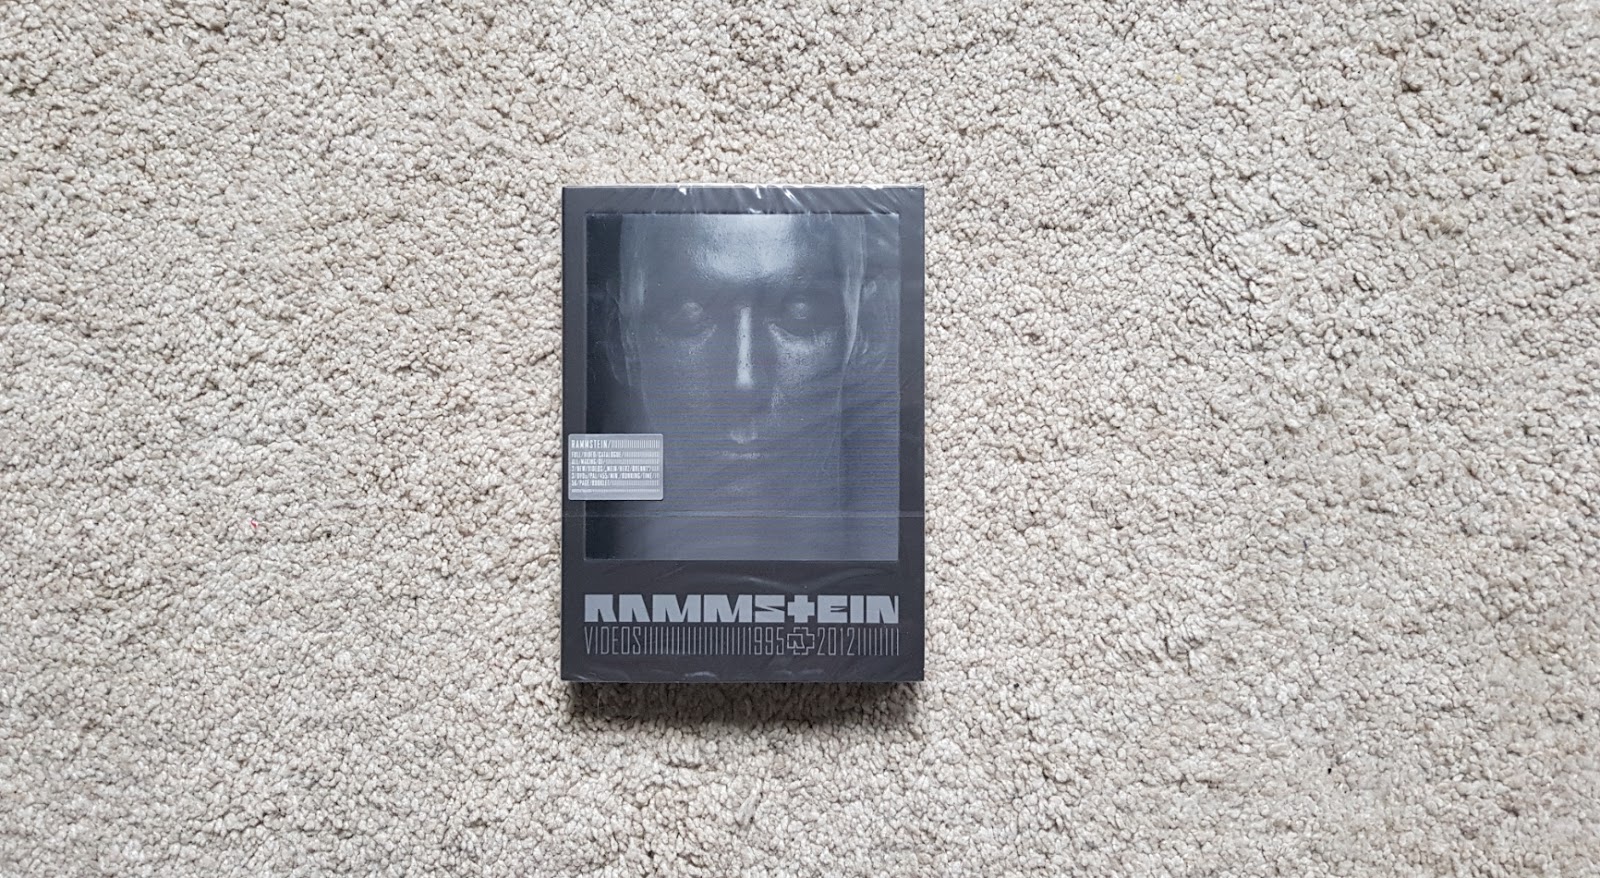 Rammstein Uncensored Video